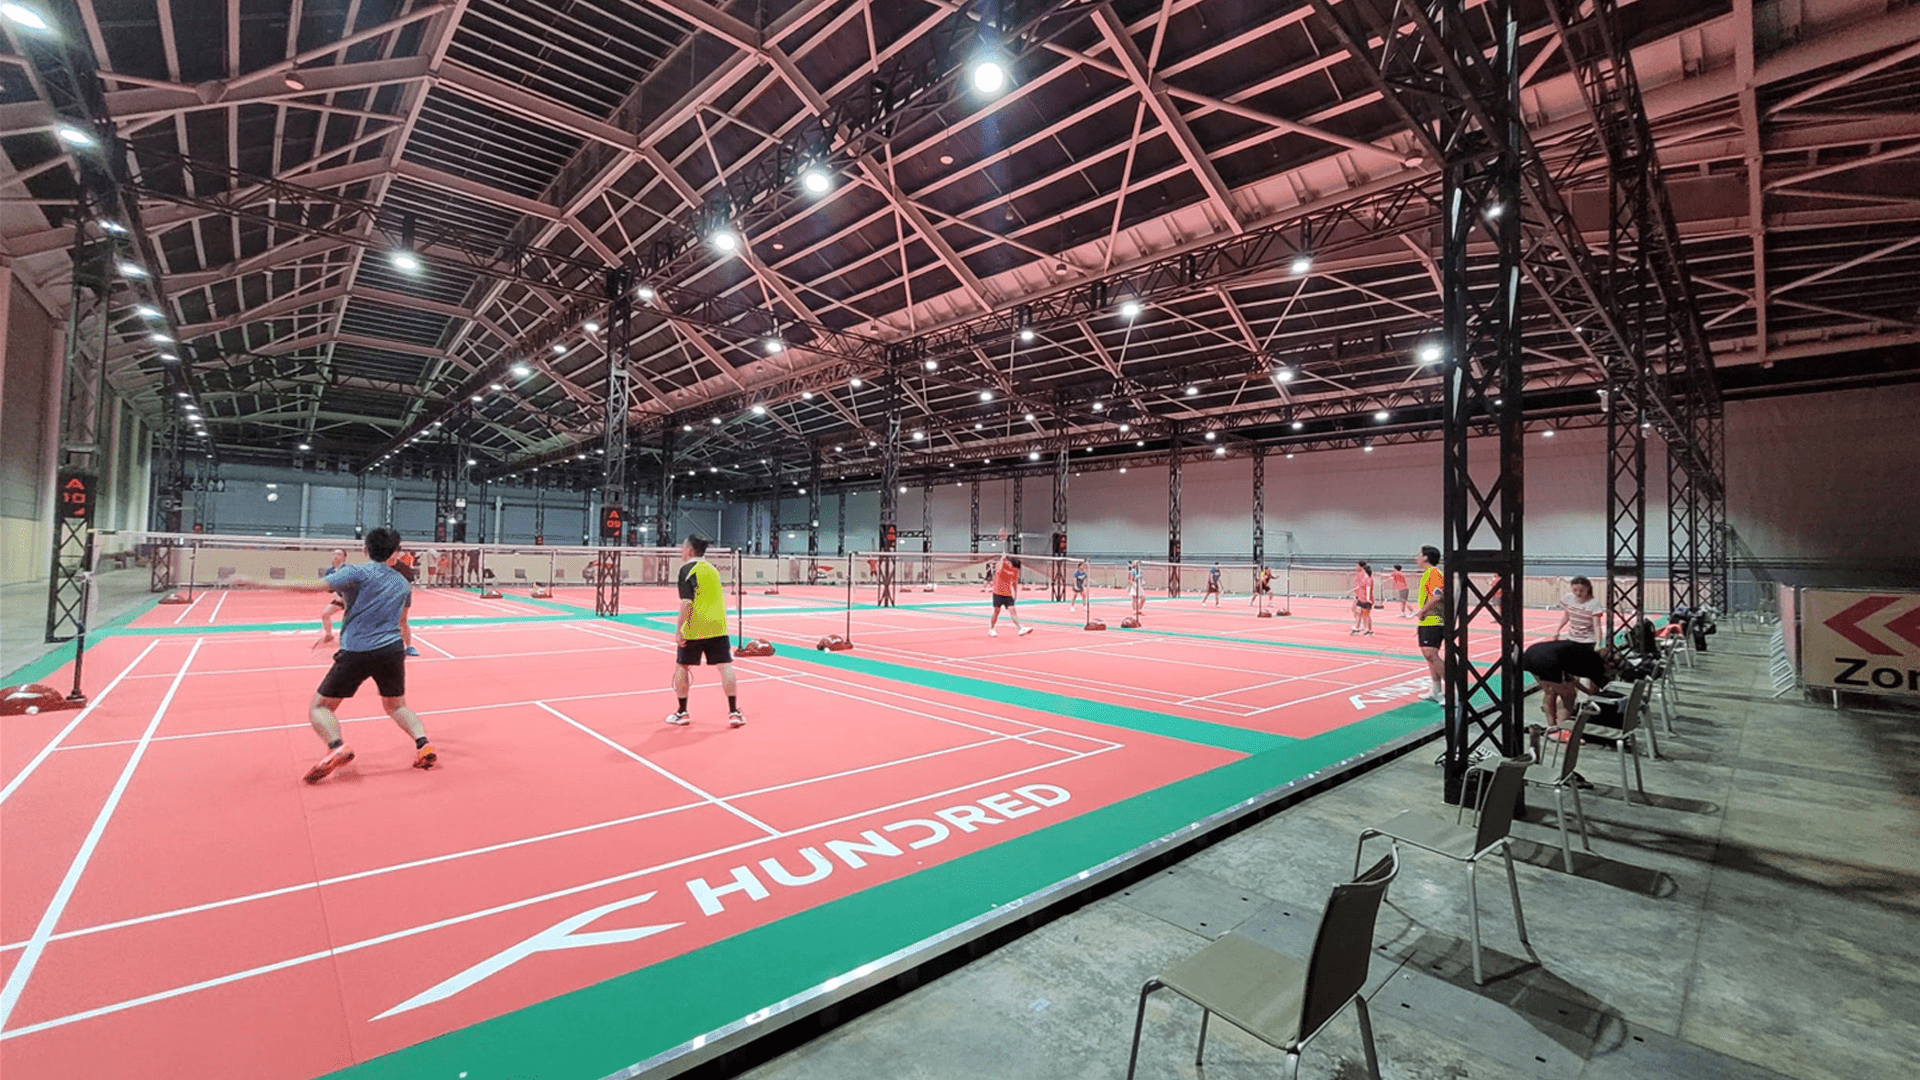 Singapore Badminton Hall at Expo